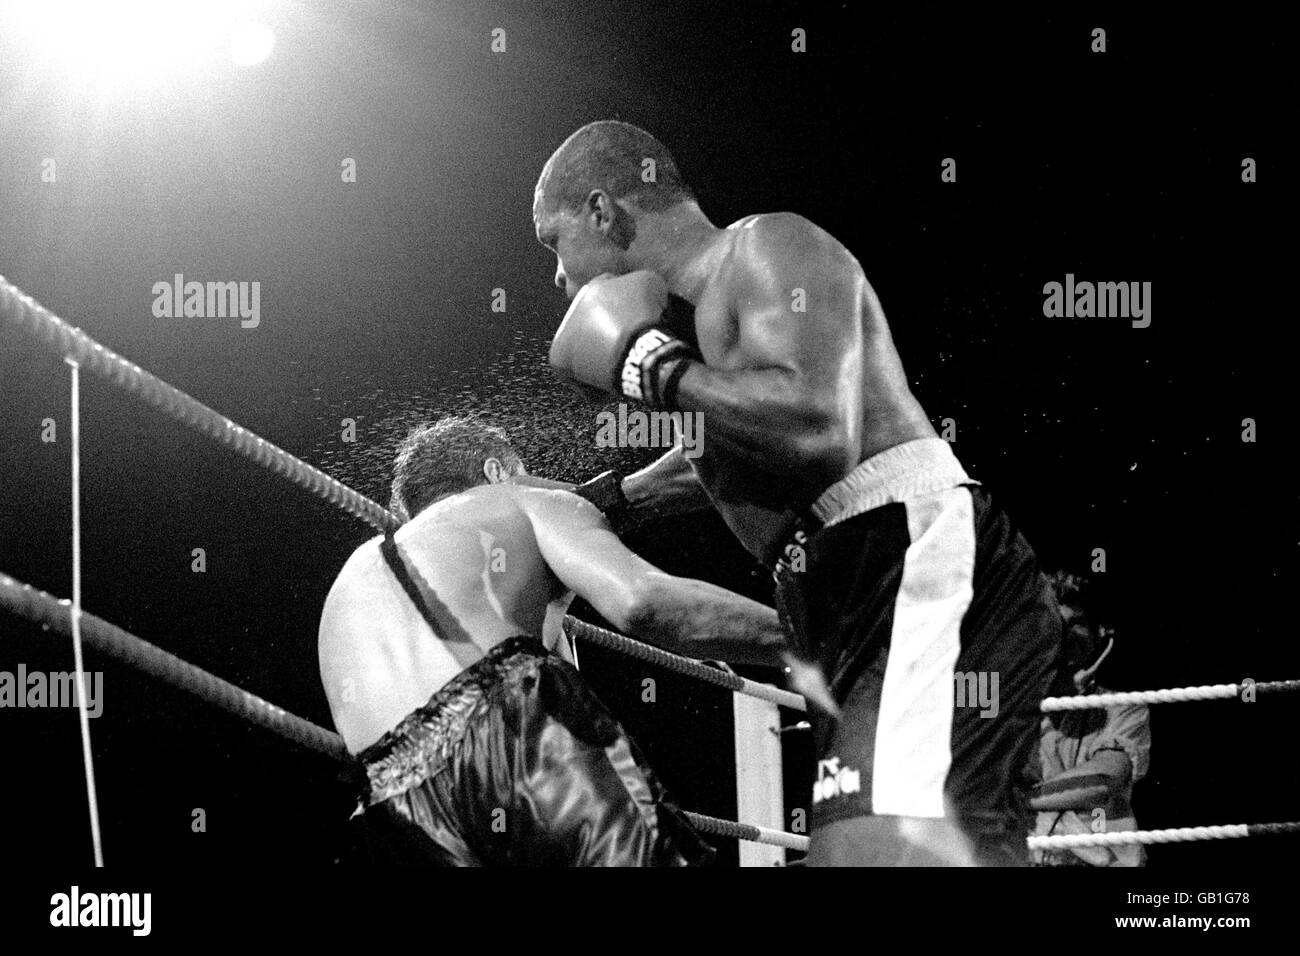 Boxing - WBC Cruiserweight Championship - Carlos de Leon v Sammy Reeson - London Arena. Sammy Reeson, left, takes a solid blow from Carlos de Leon. Stock Photo